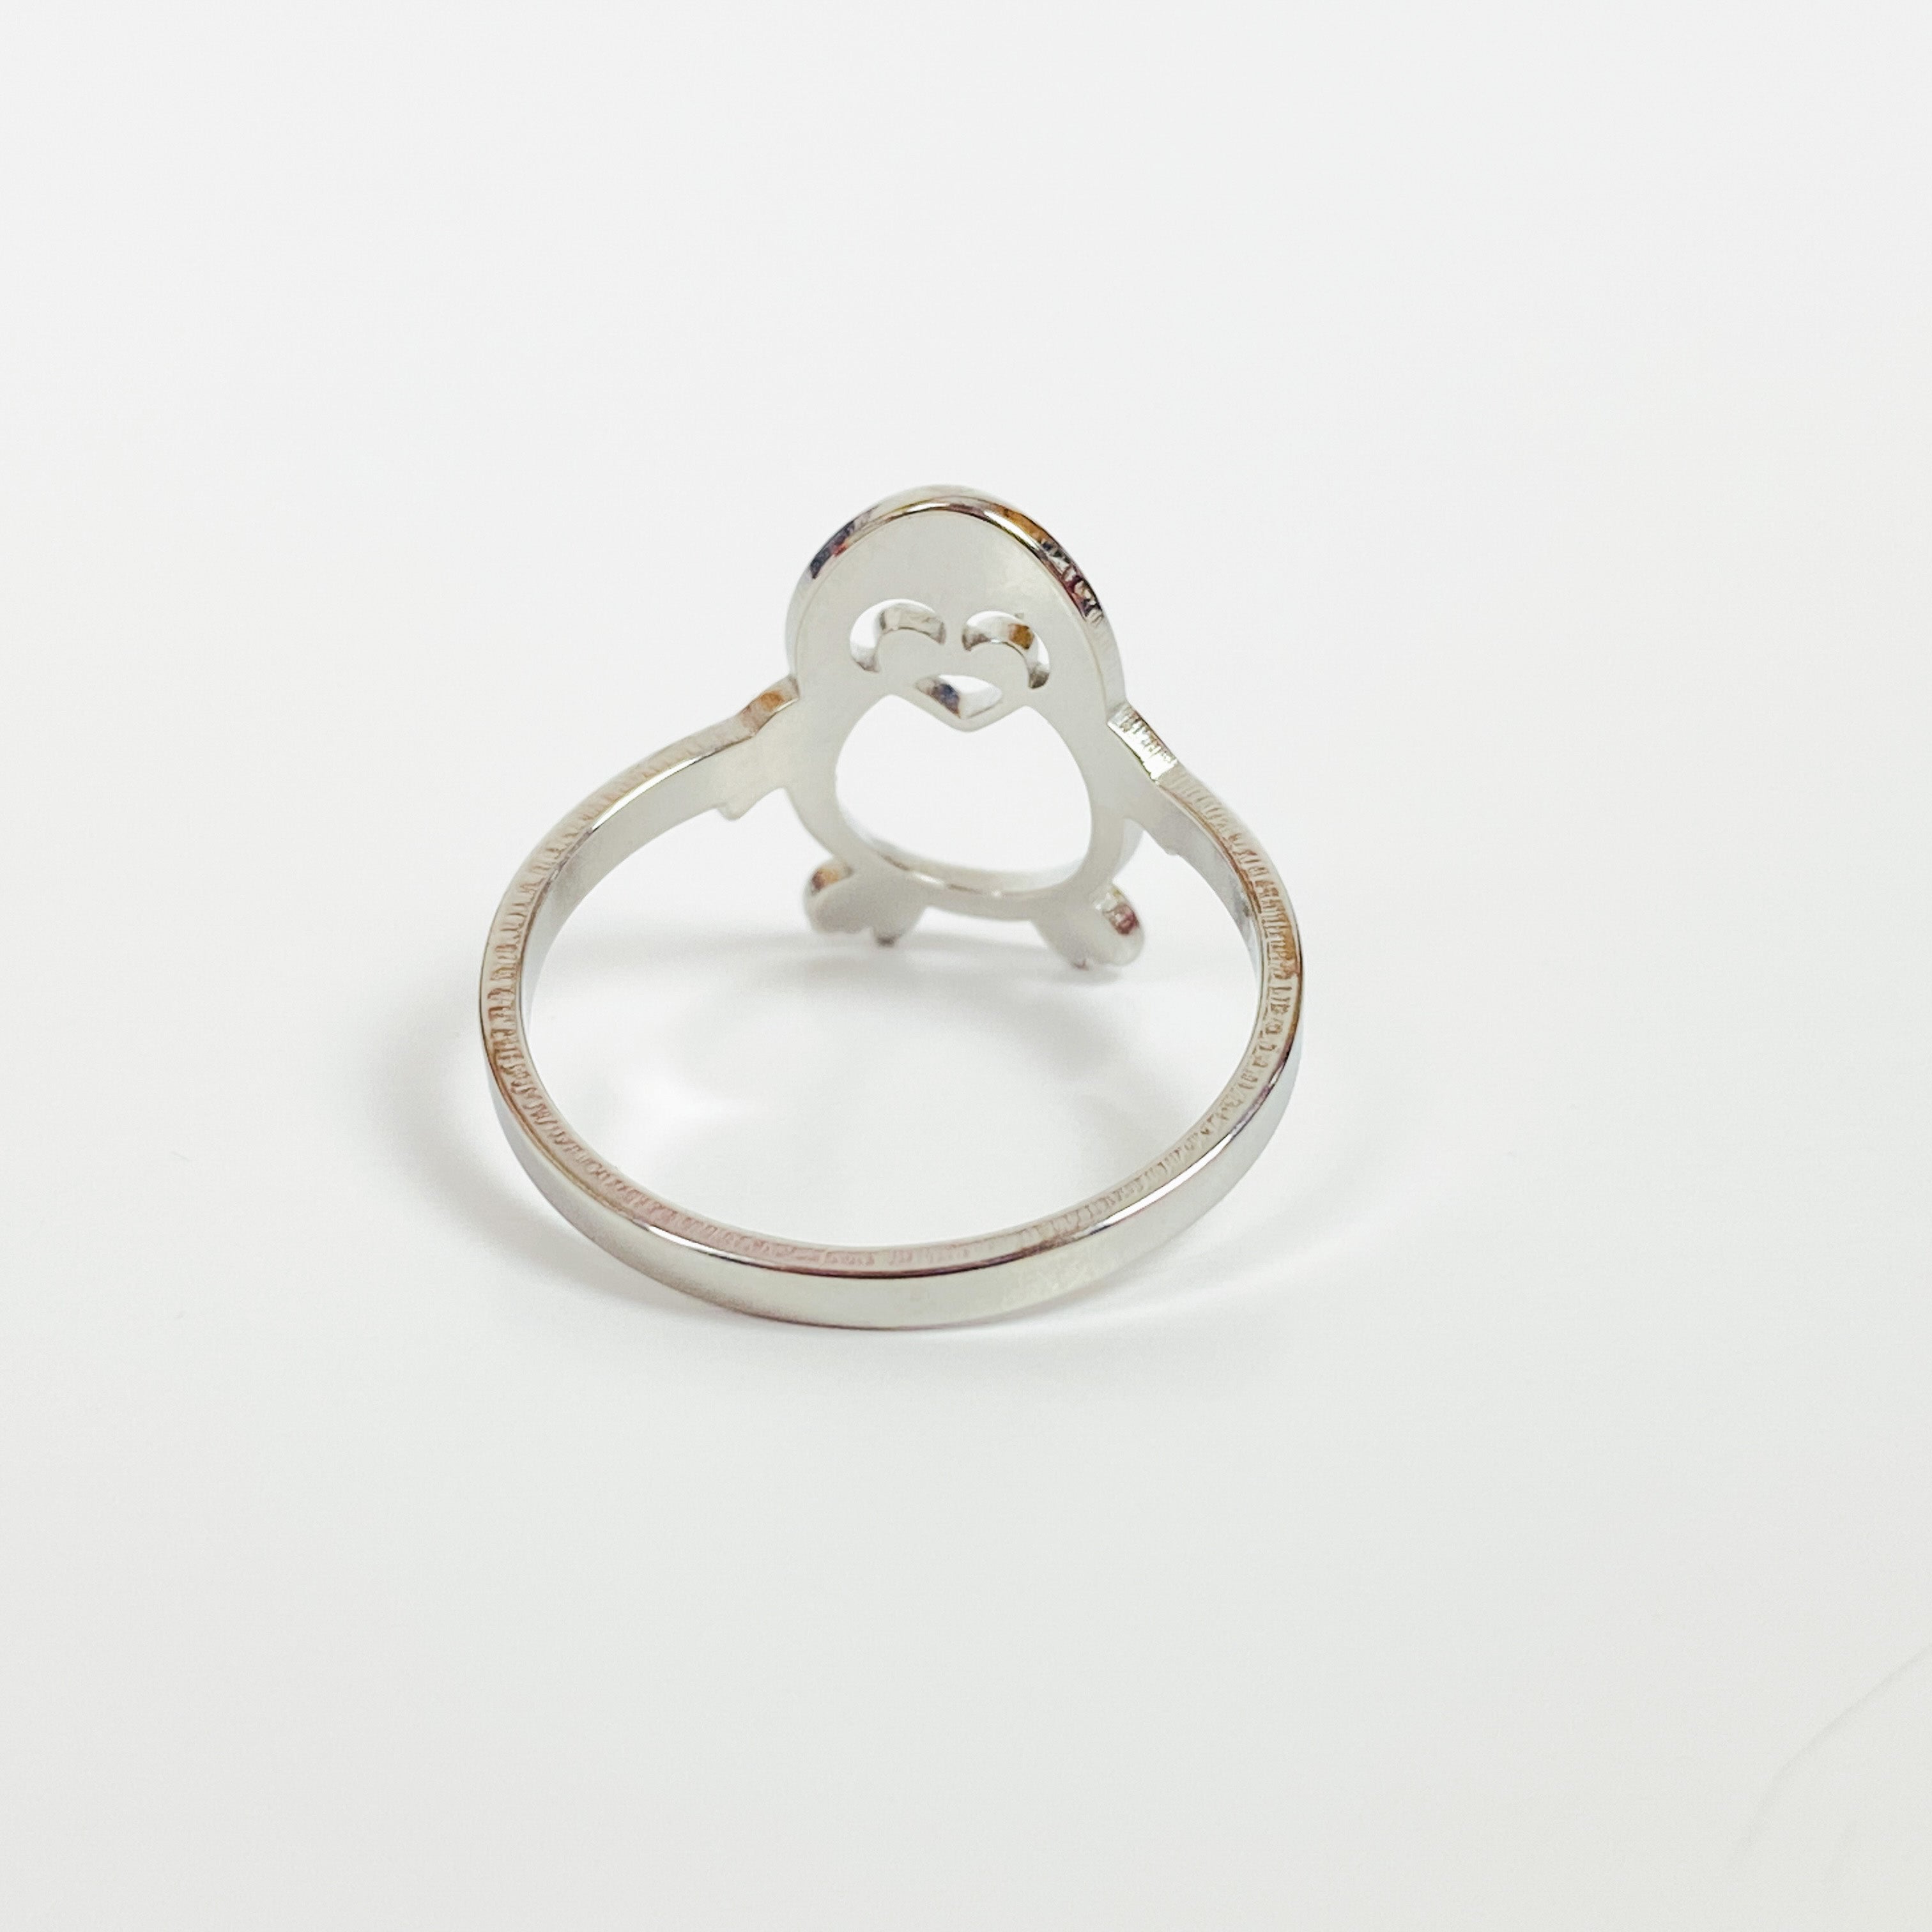 Vintage Retro Adjustable Penguin Ring Silver